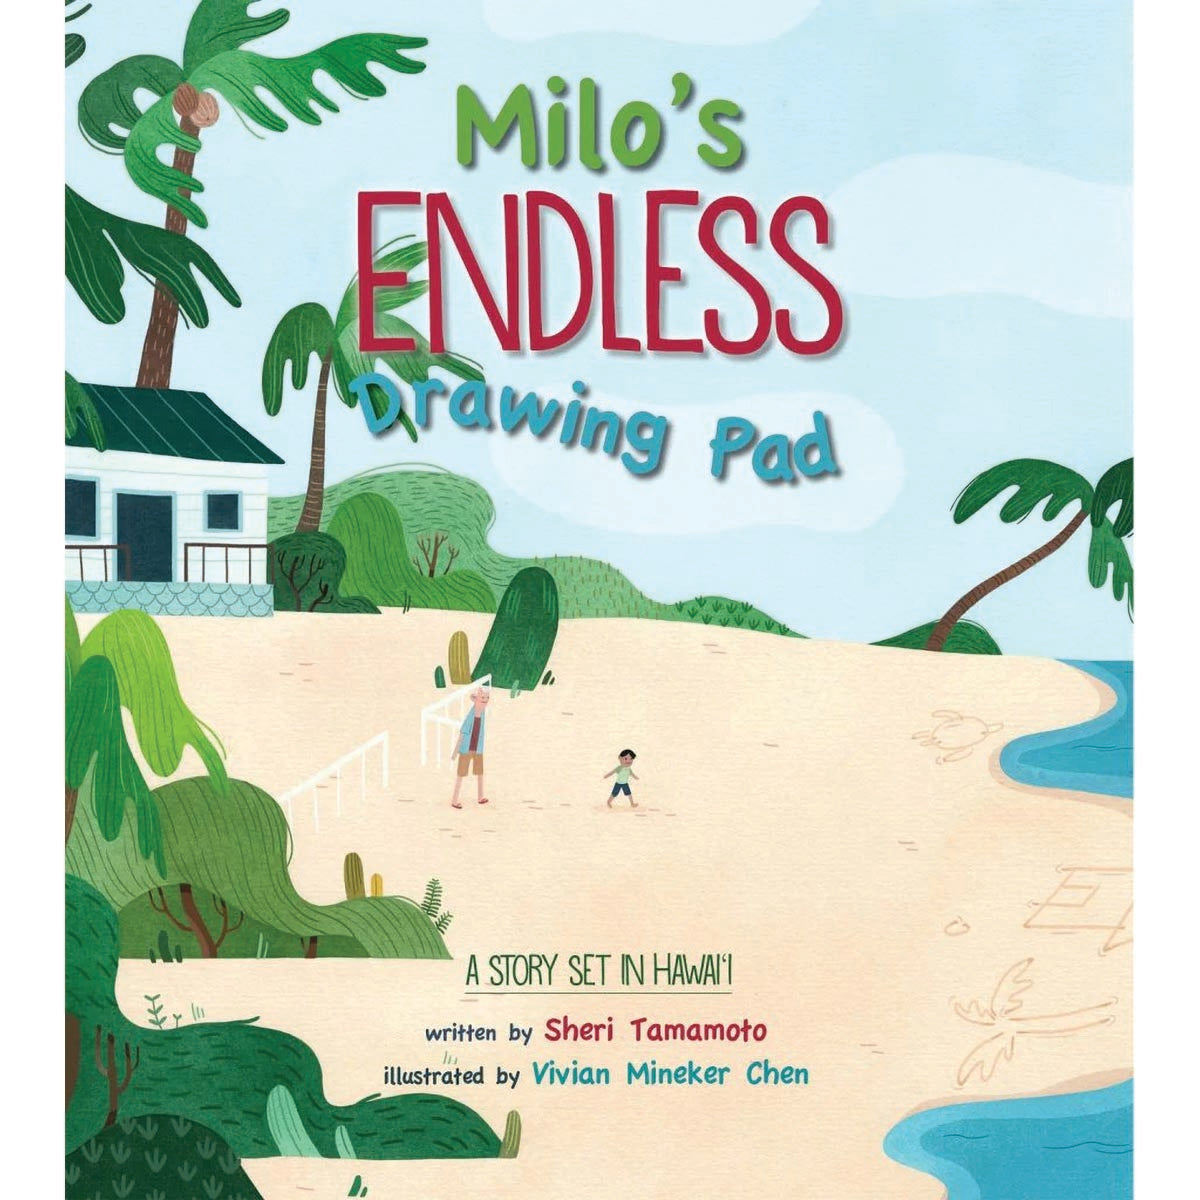 Milo's Endless Drawing Pad